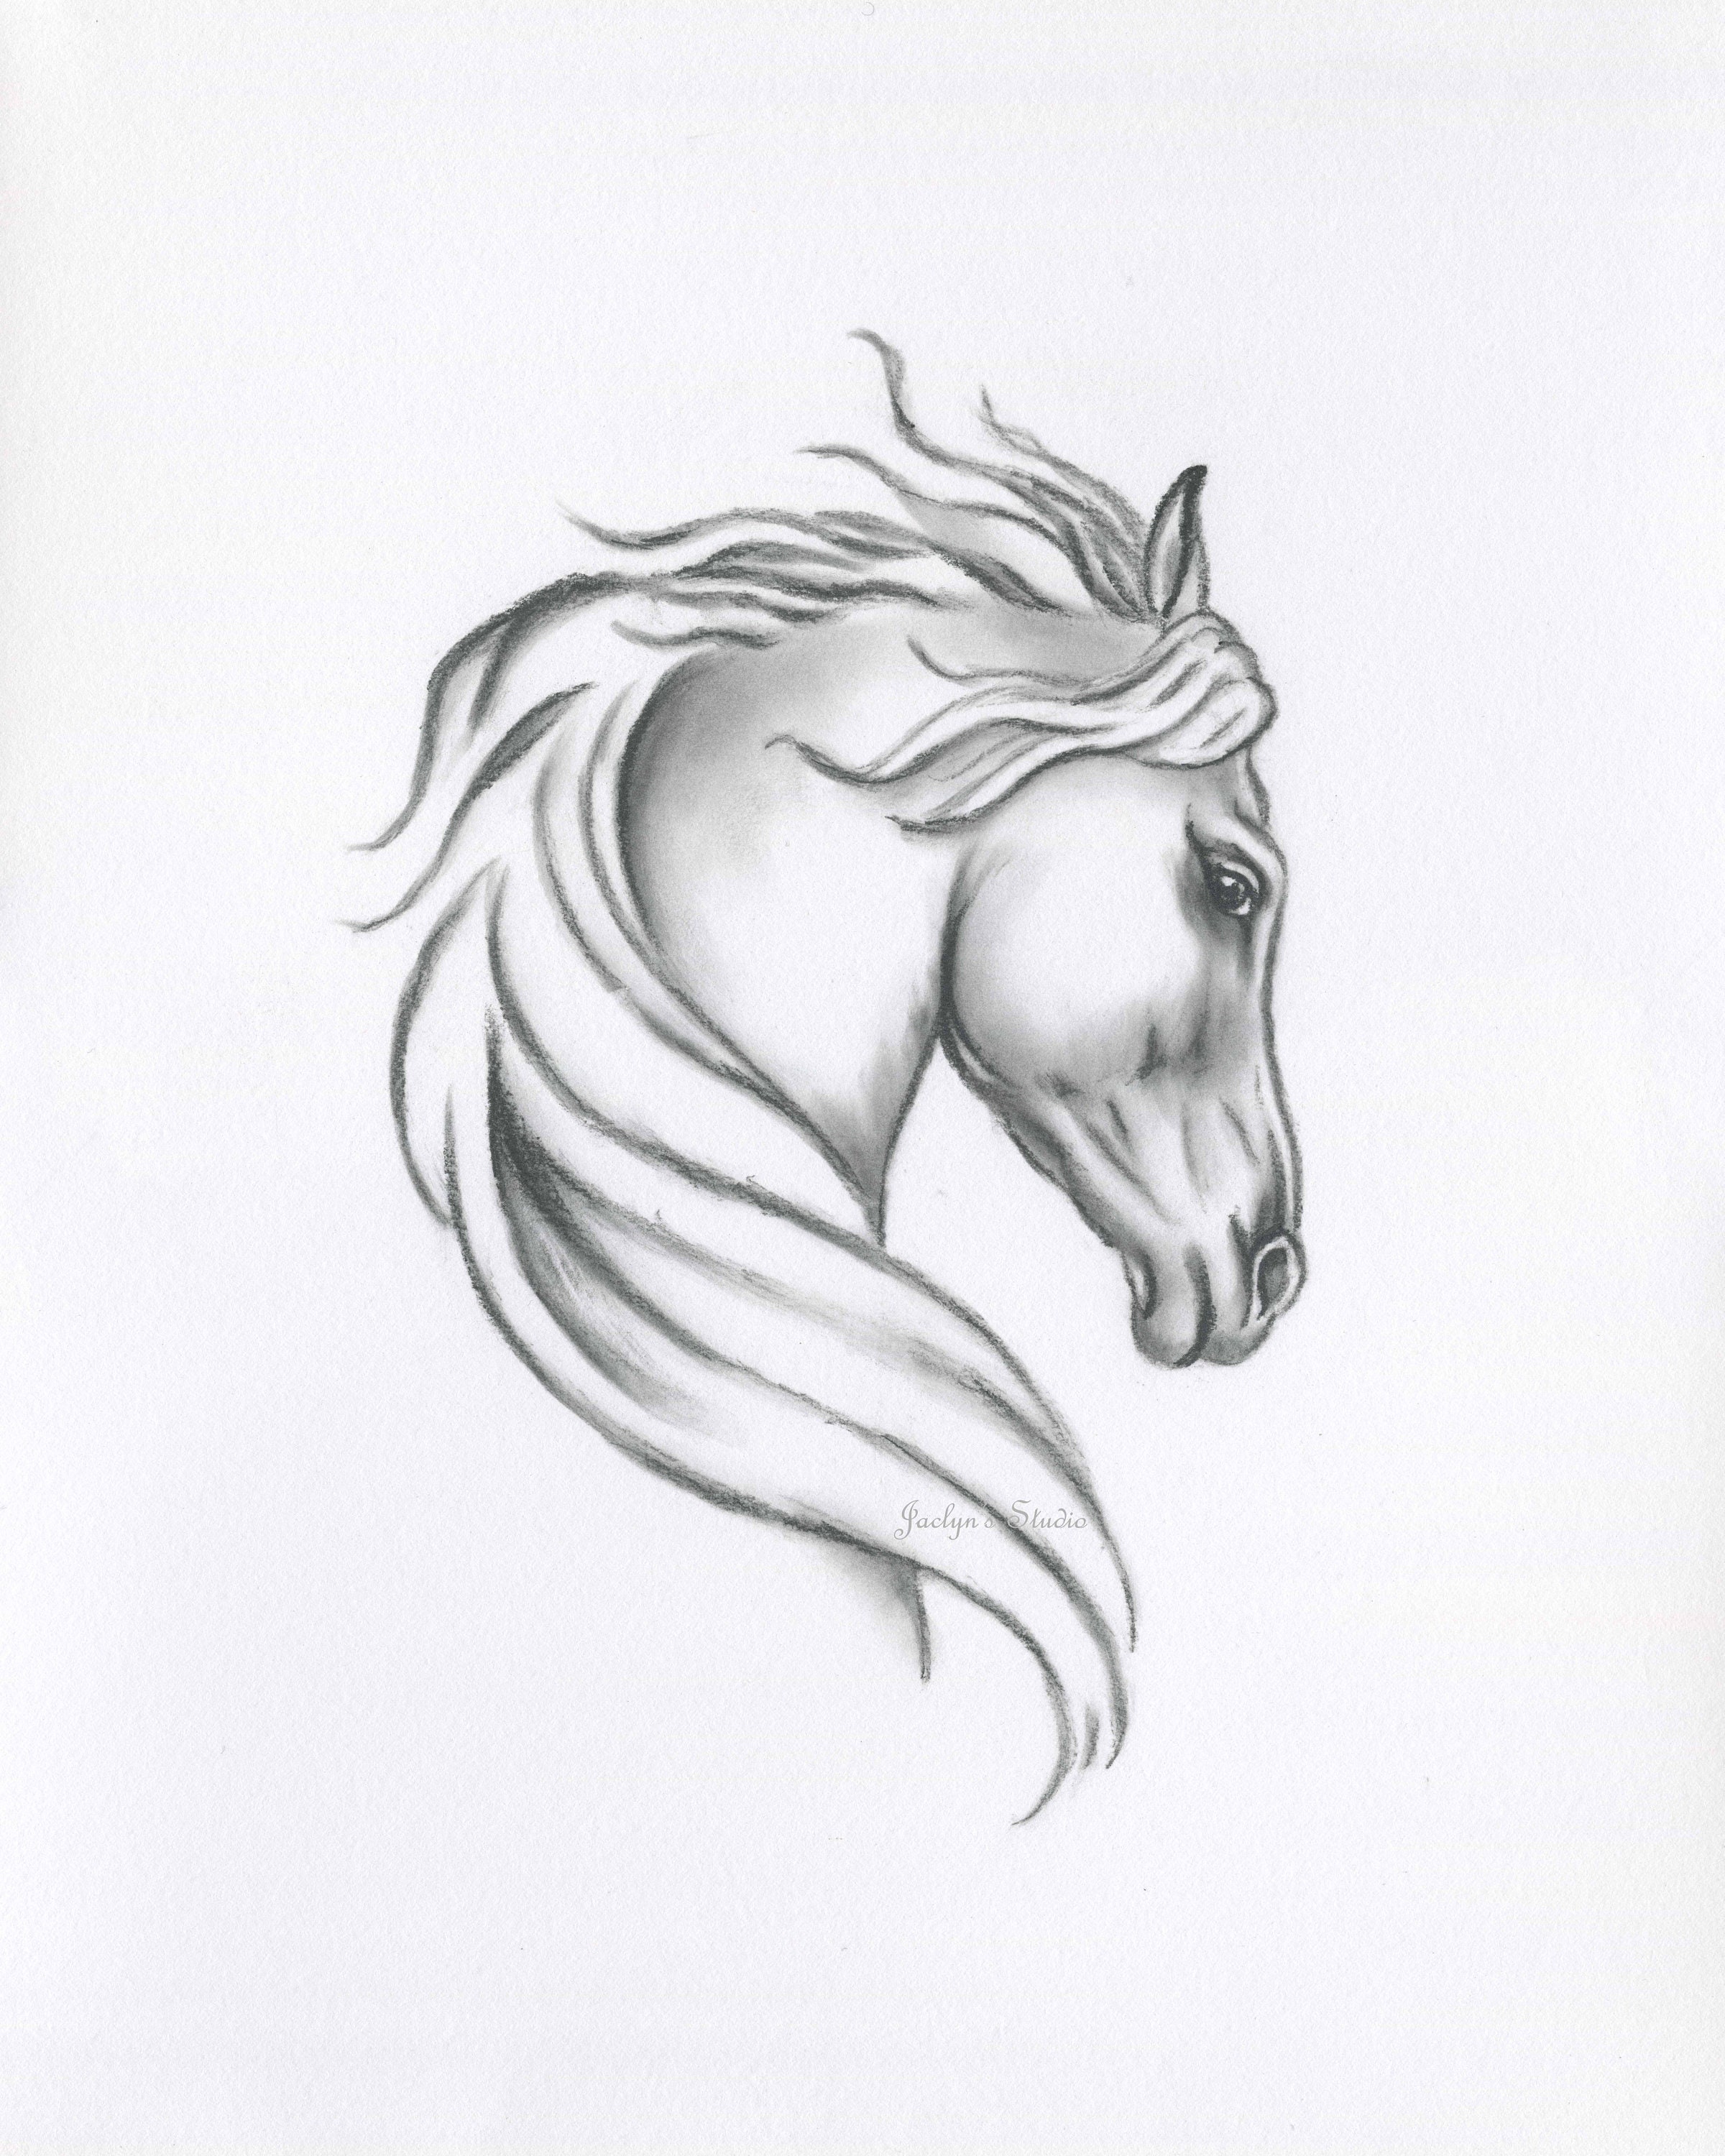 Black Horse Black amp White Animal Original Charcoal Drawing 14 x 17in   eBay